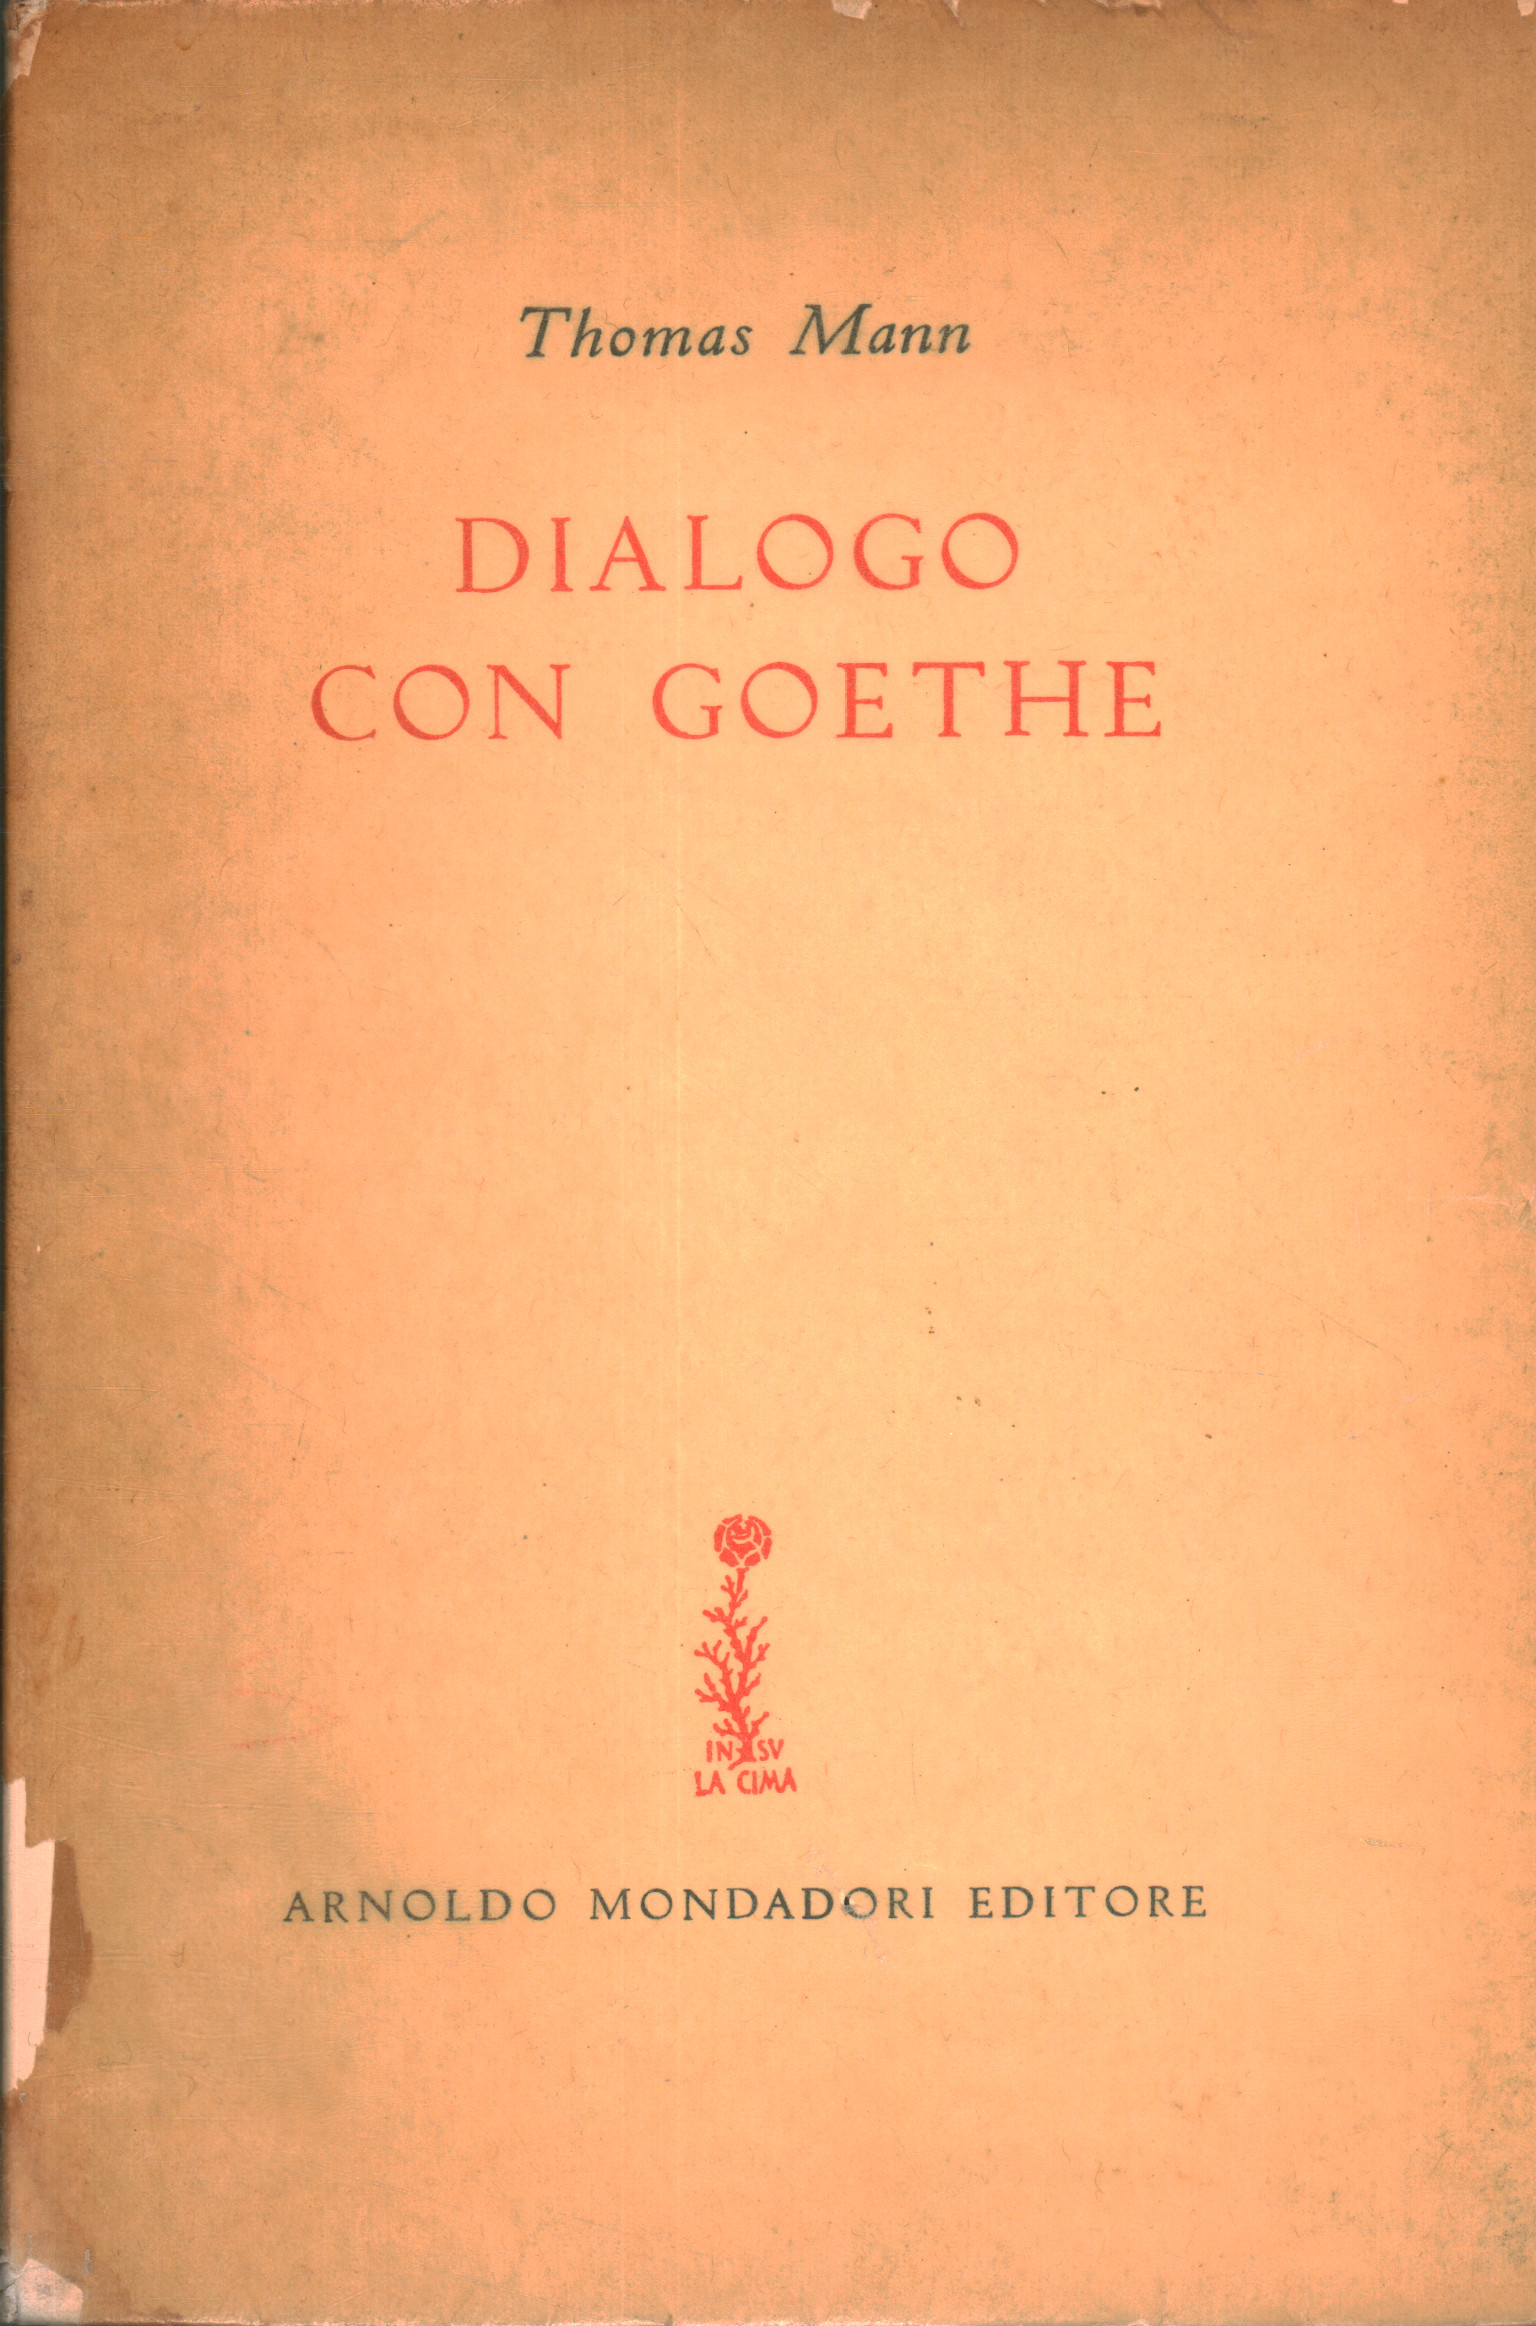 Dialogue with Goethe, Thomas Mann